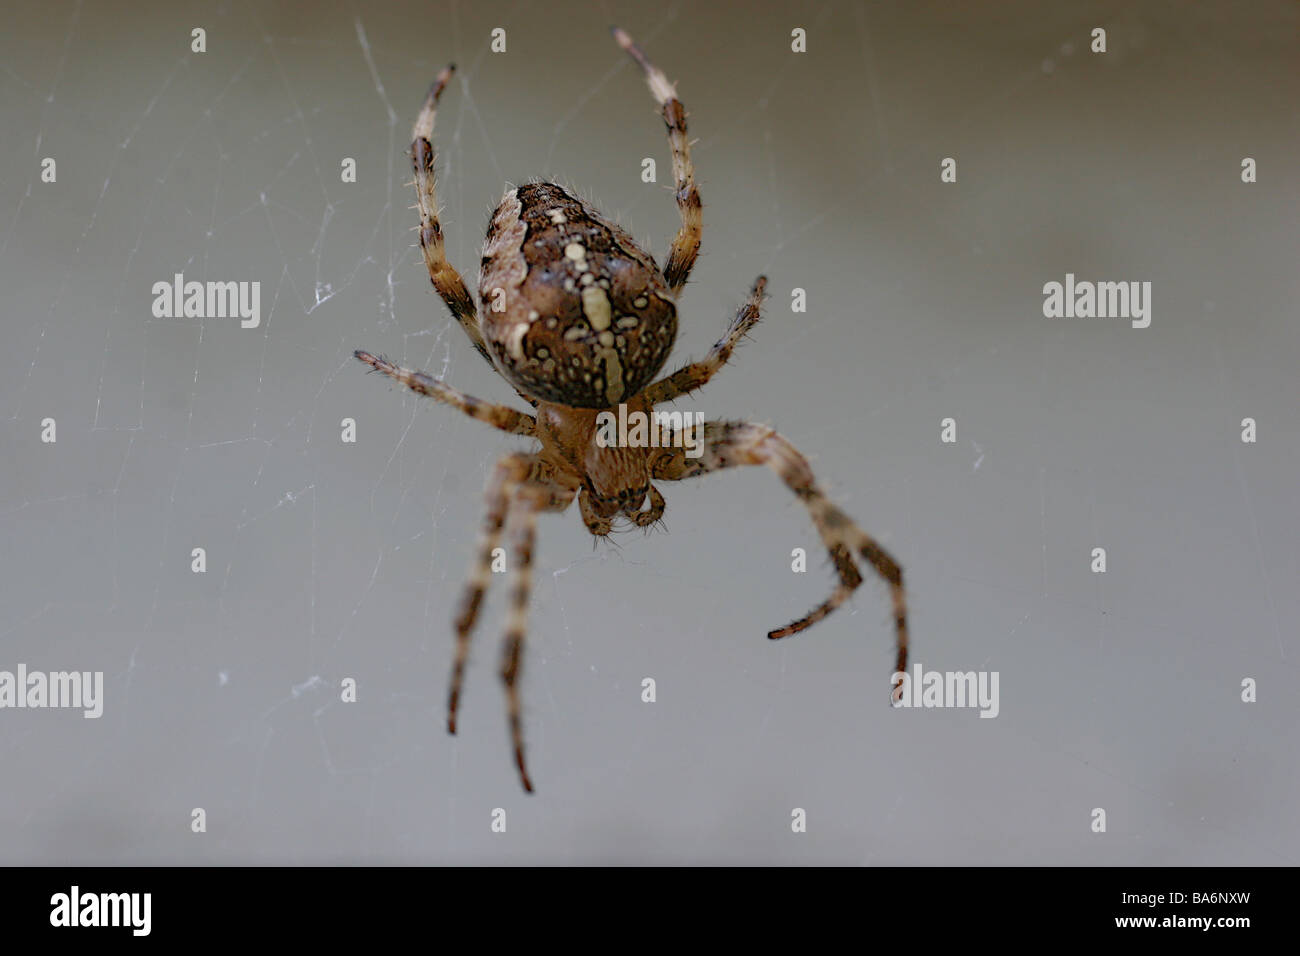 Kreuz-Spinne Araneus Diadematus Unschärfe Natur Tier Spider Arachnid Webspinne Rad-Net-Spinne Araneidae Konzept Angst Ängste Stockfoto